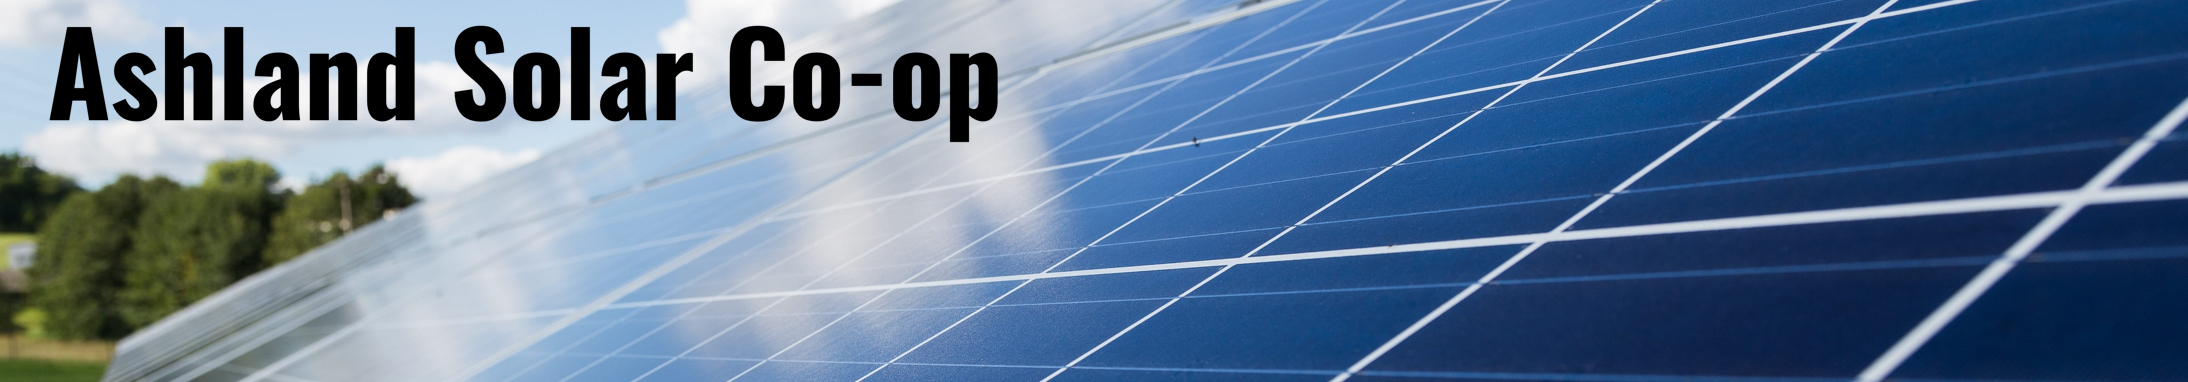 Ashland Solar Co-op header